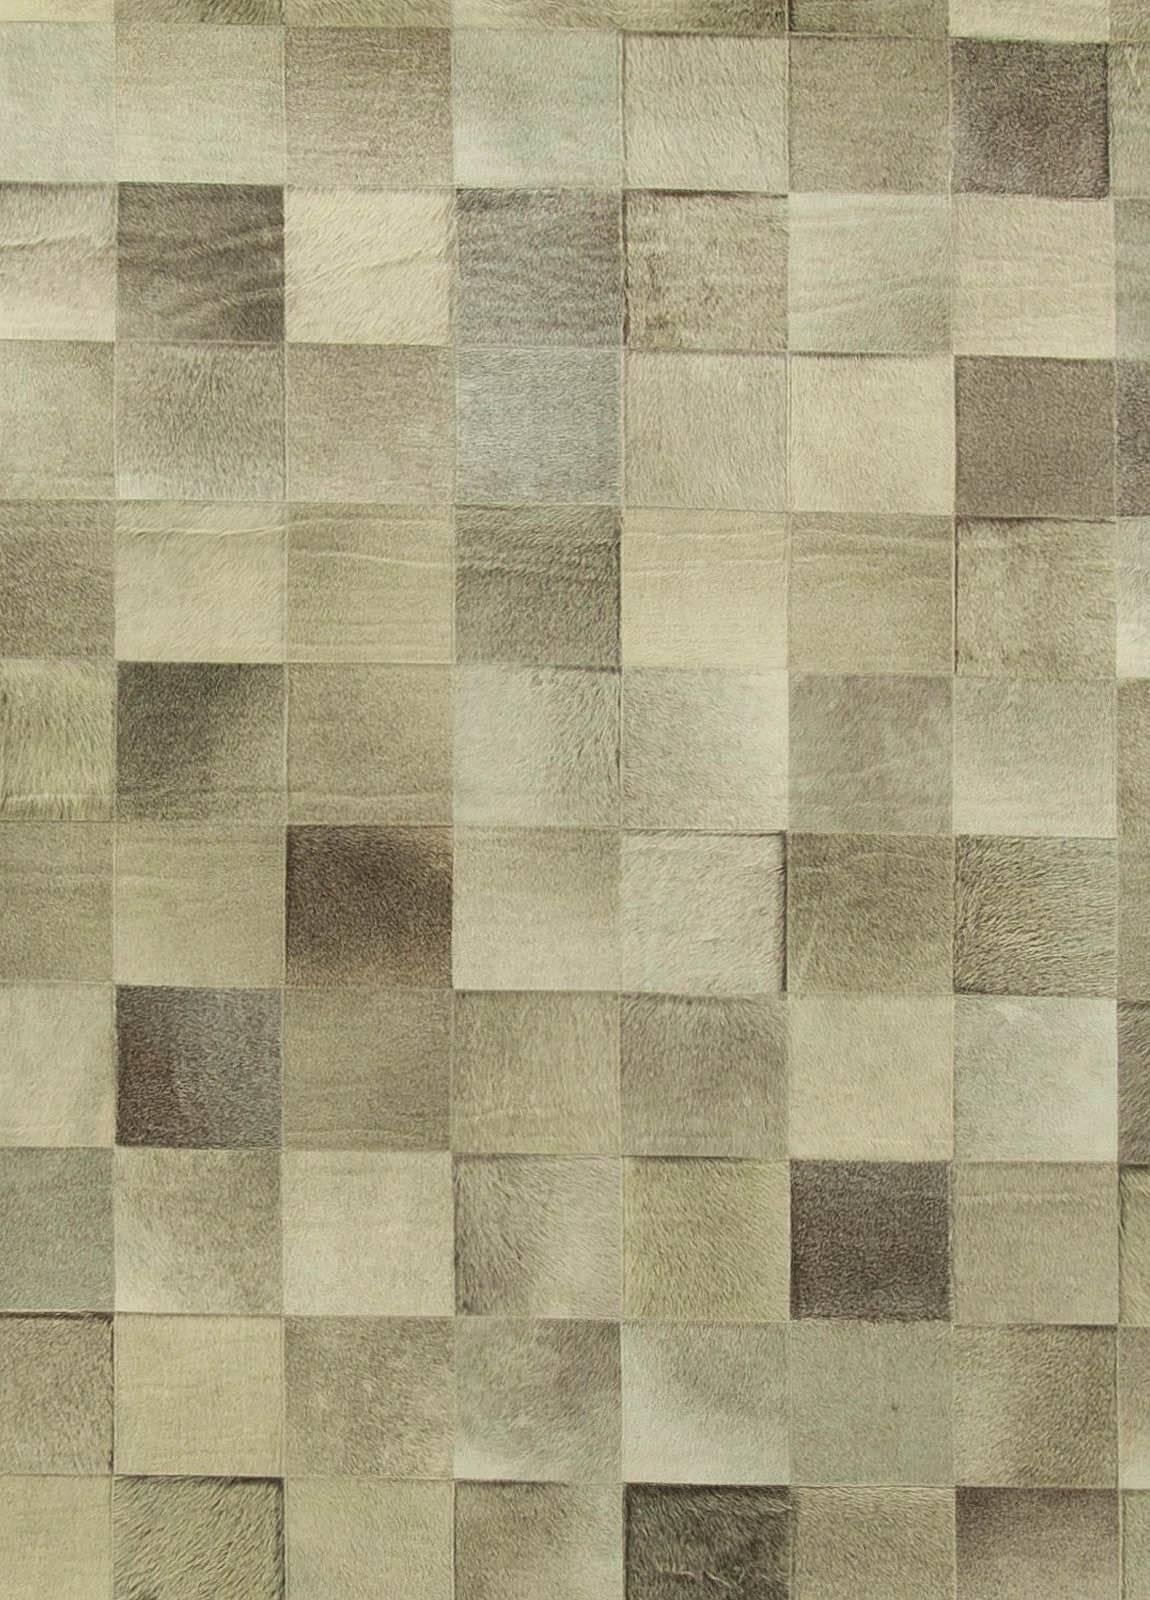 Large hair-on-hide grey and light brown modern rug by Doris Leslie Blau.
Size: 17'5